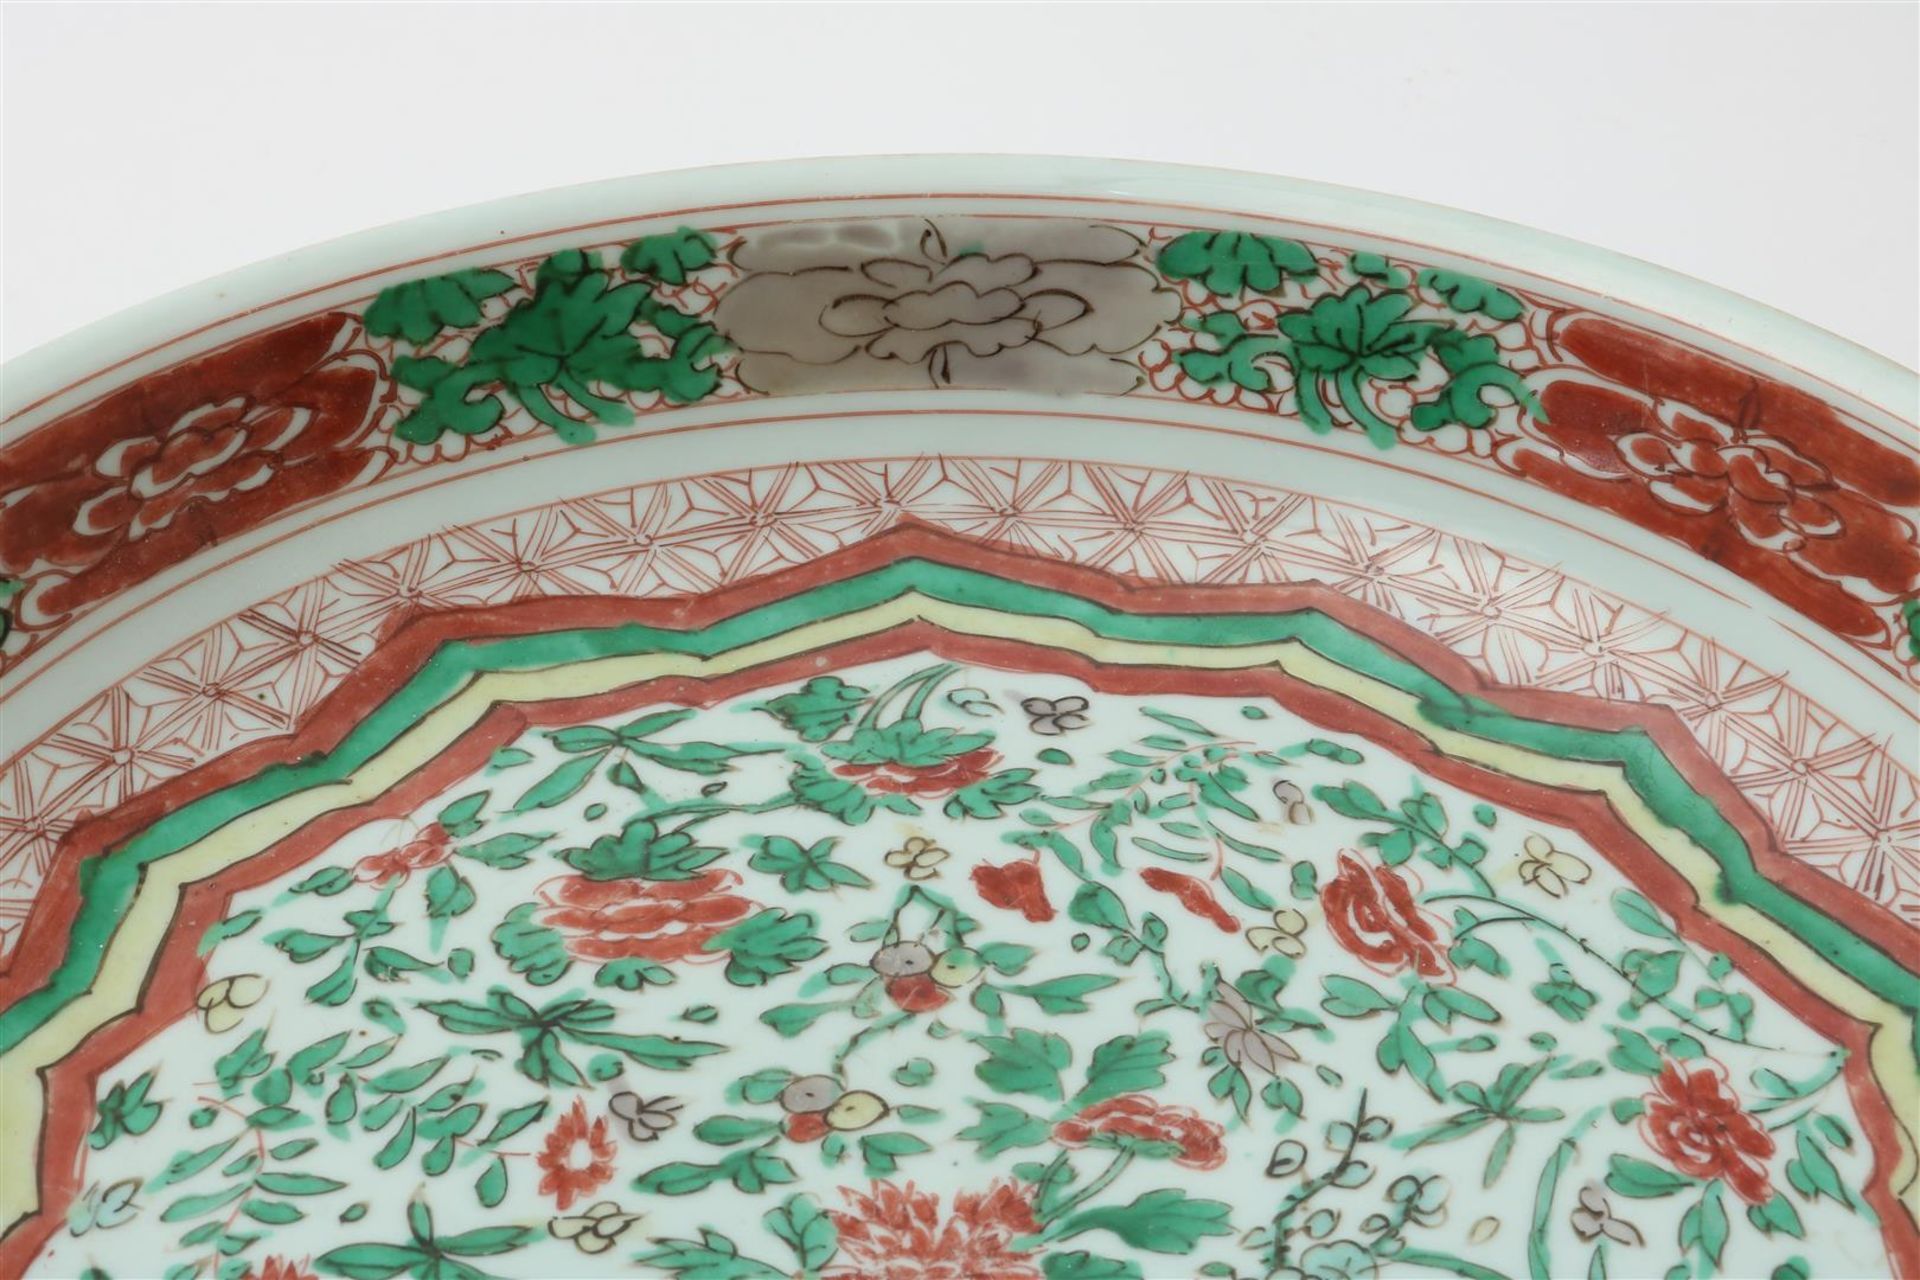 Porcelain Kangxi round dish with Famille Verte decor, diam. 33.5 cm. China, 18th century (with - Image 3 of 6